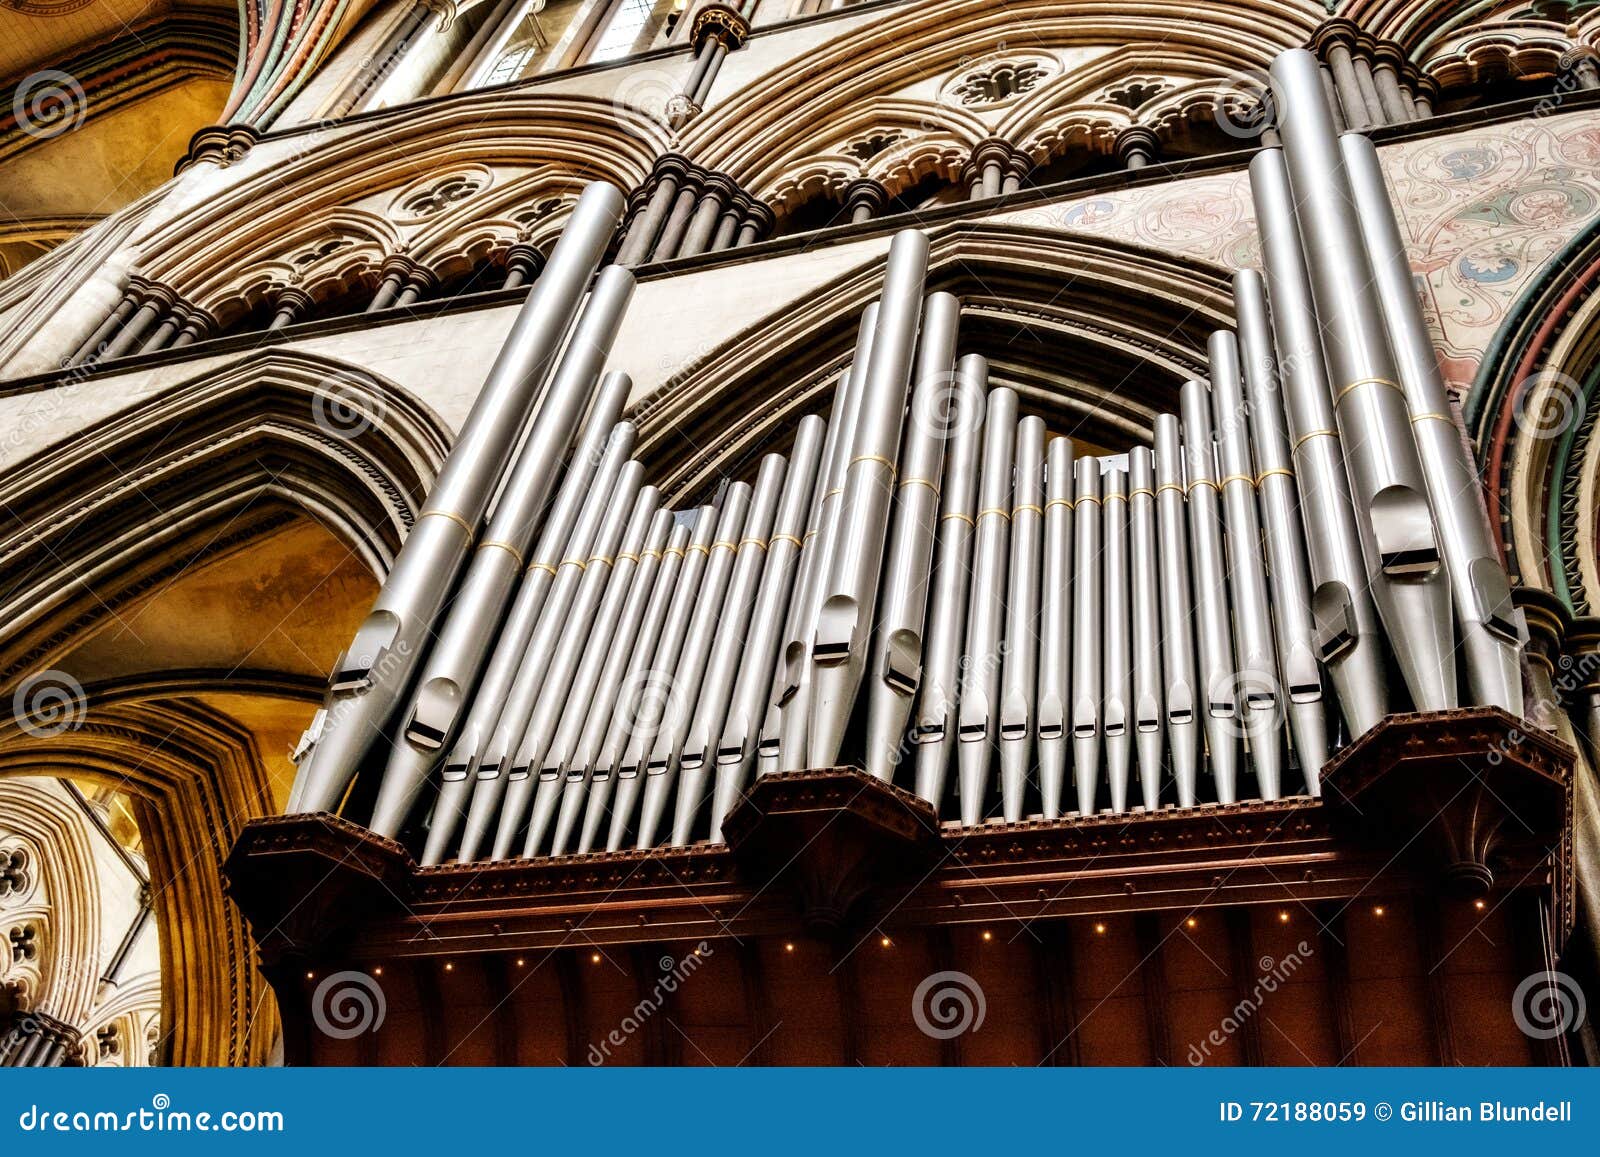 pipes of father willis organ salisbury cathedral salisbury england